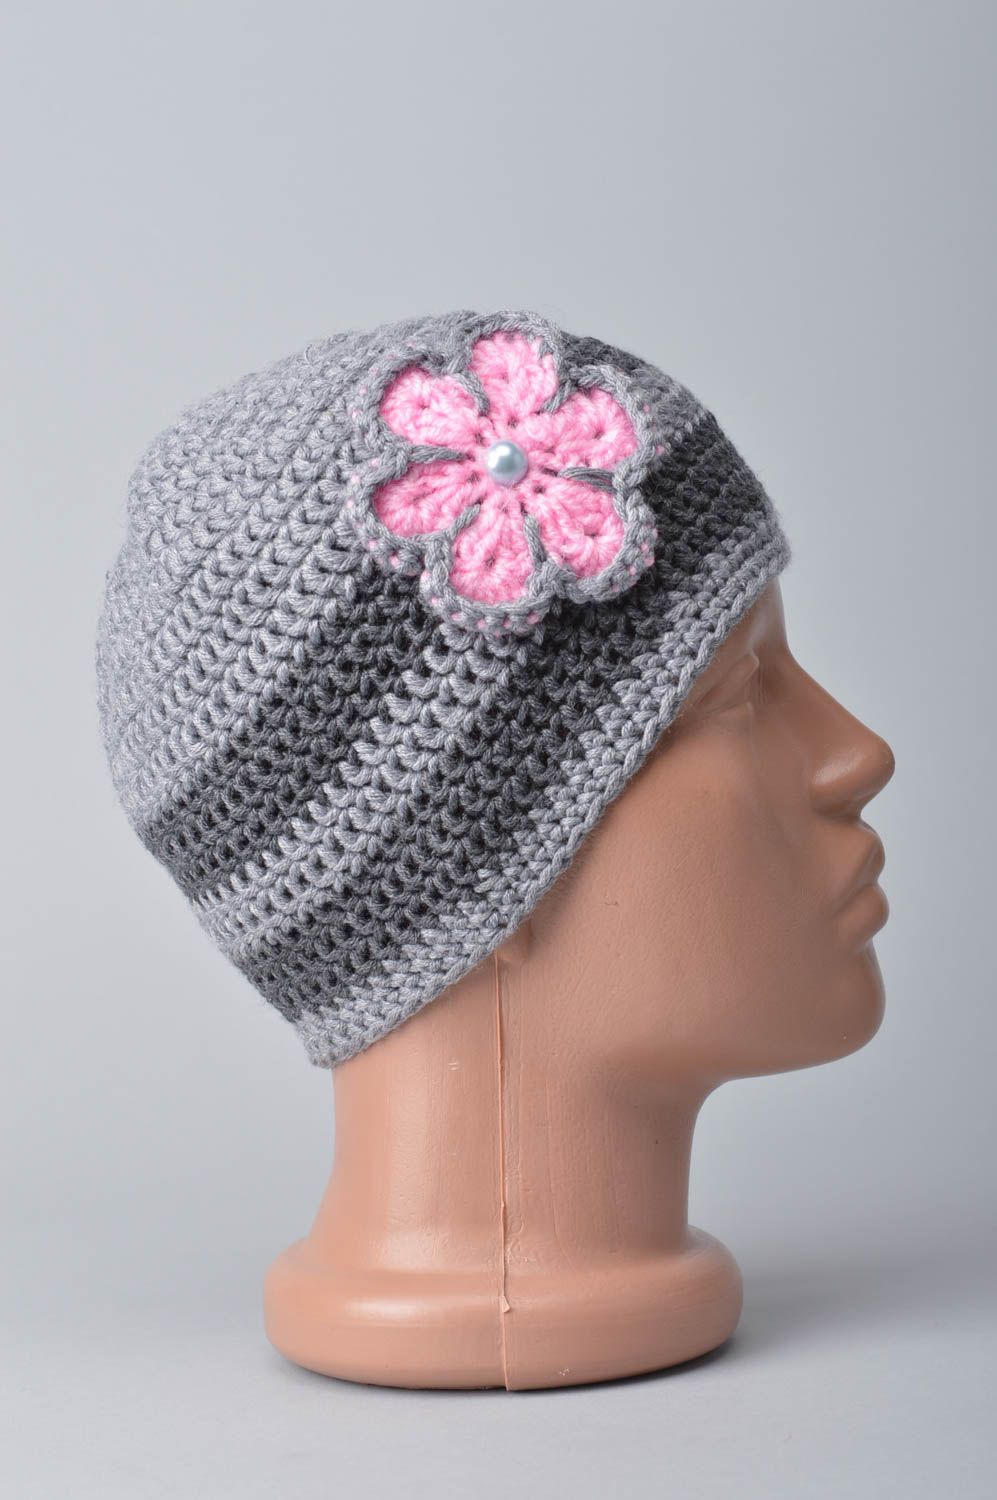 Handmade warm hat crochet baby hat girls accessories hats for kids kids gifts photo 3